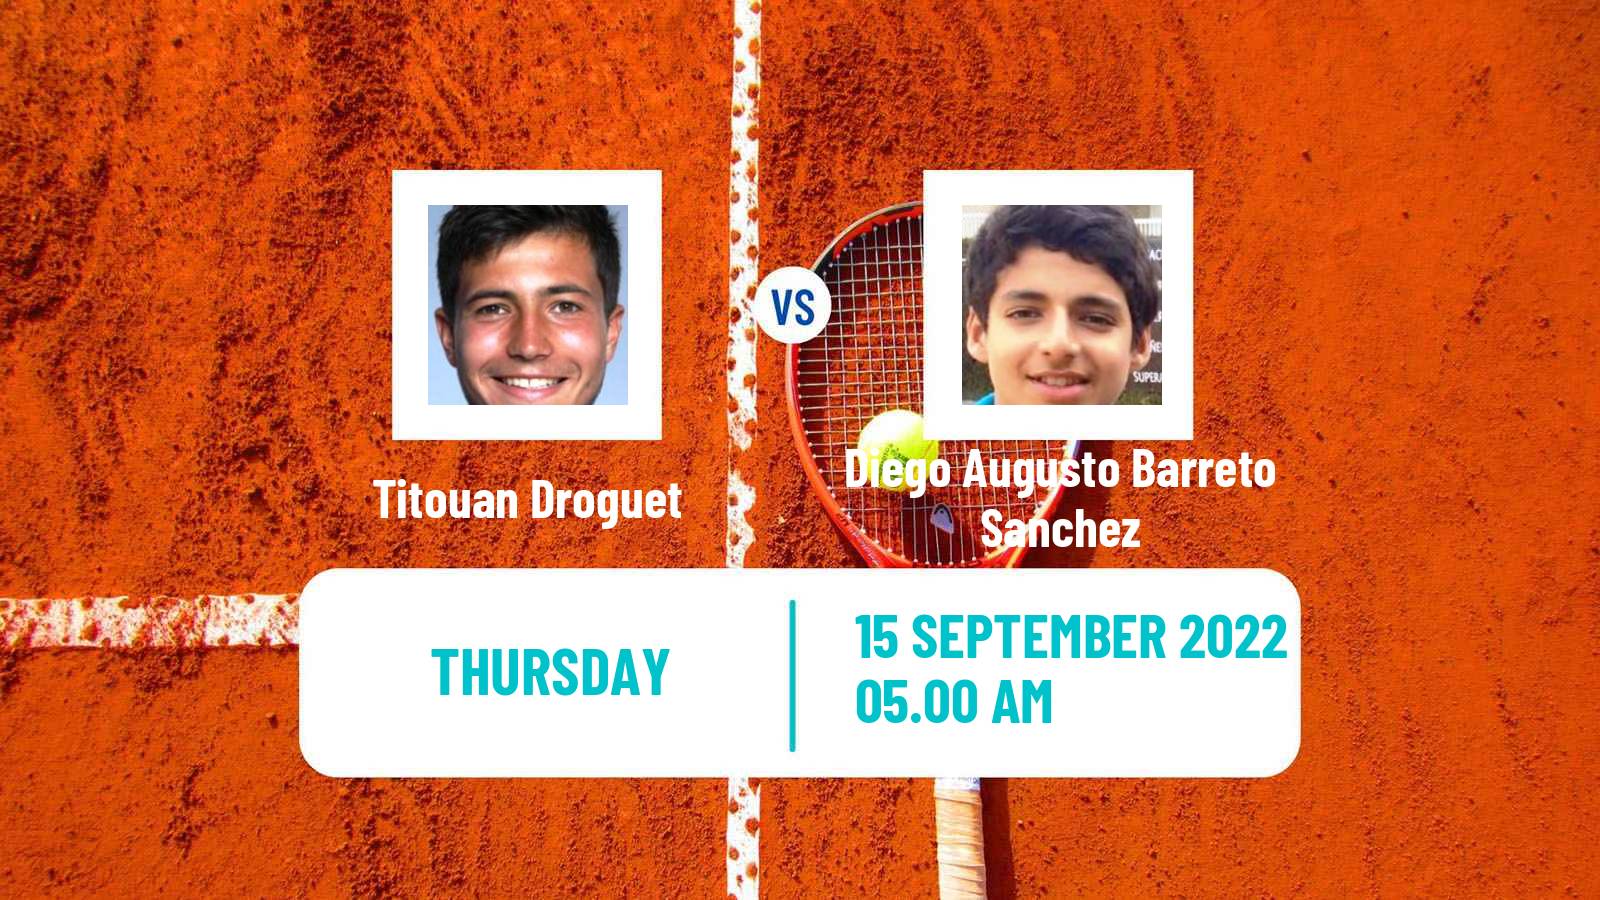 Tennis ITF Tournaments Titouan Droguet - Diego Augusto Barreto Sanchez